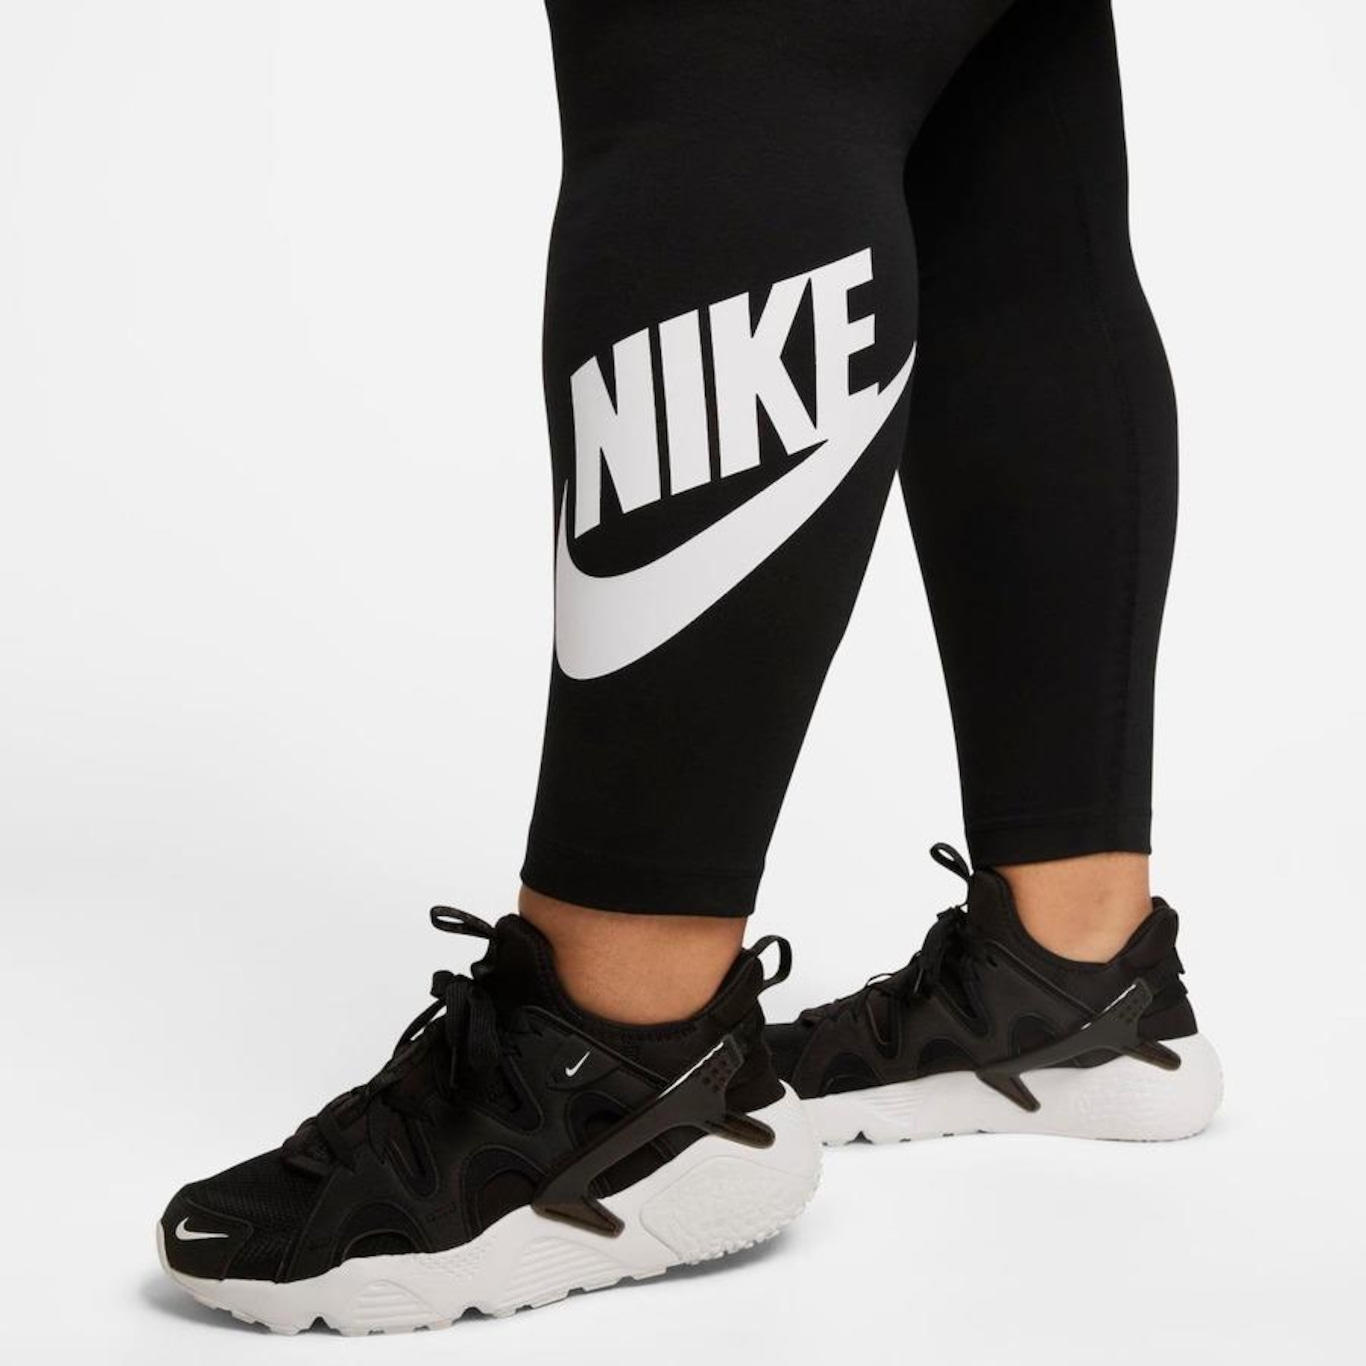 Nike Futura legasee leggings in black